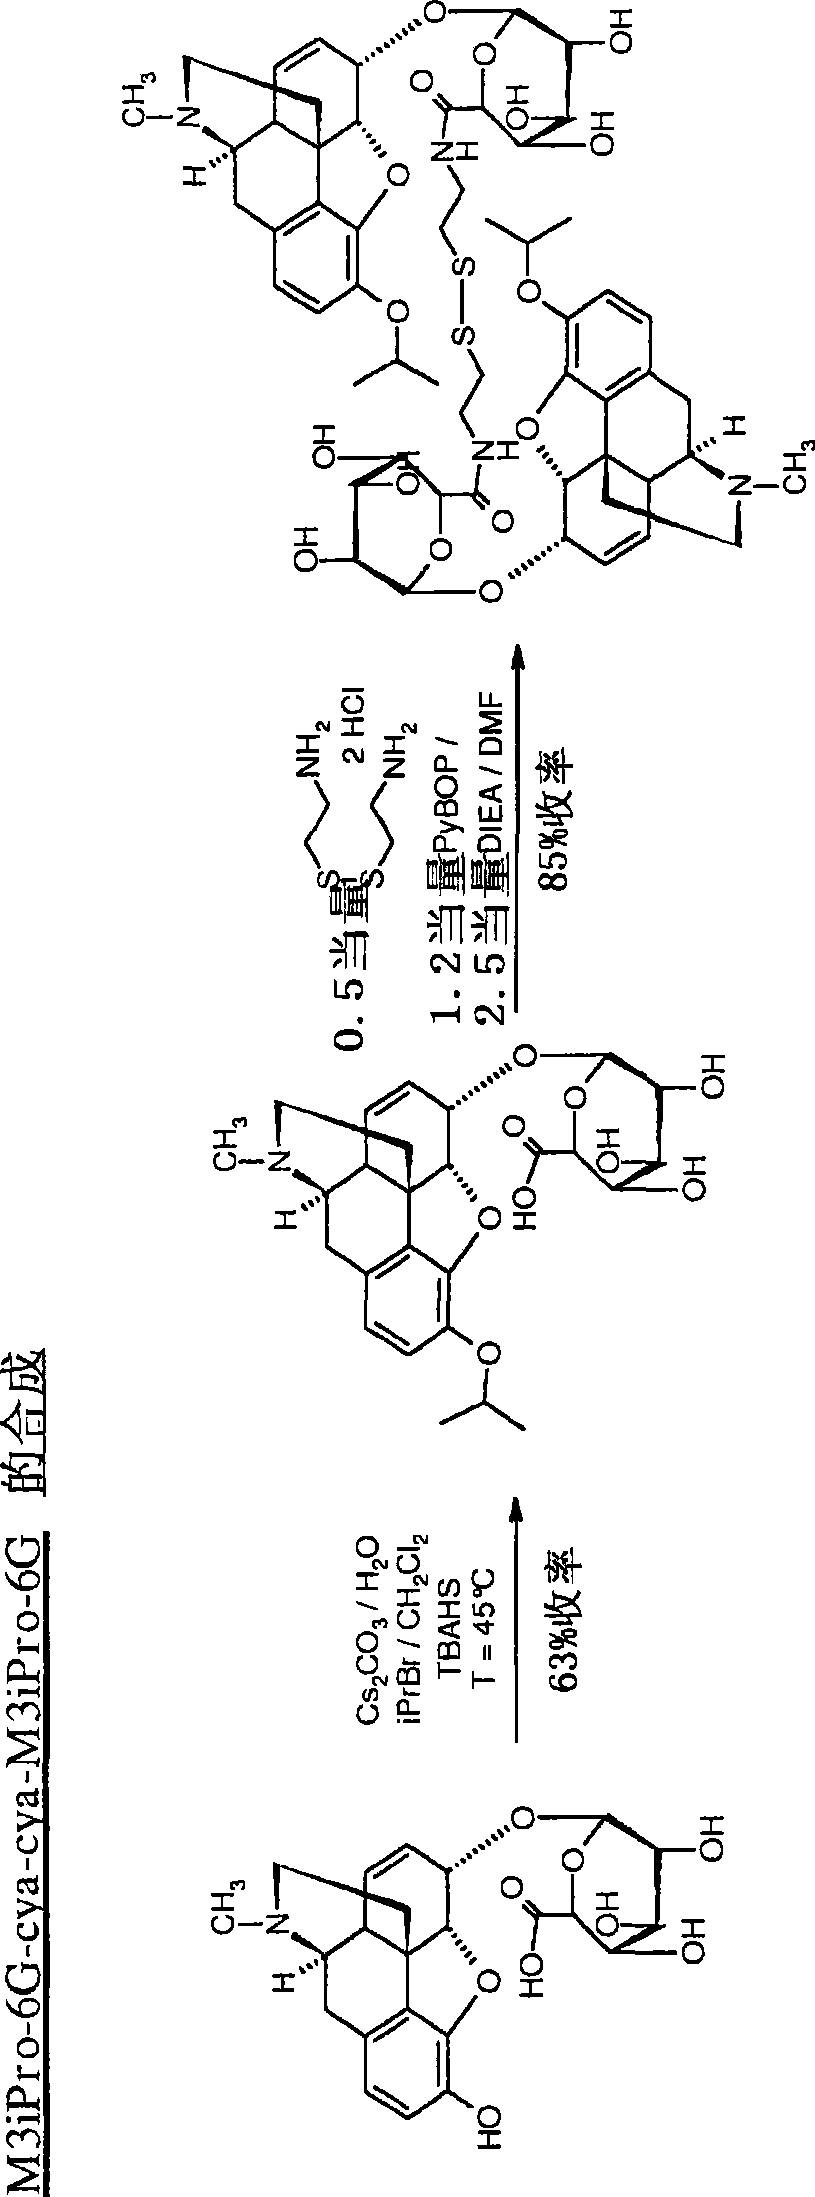 Novel morphine derivatives